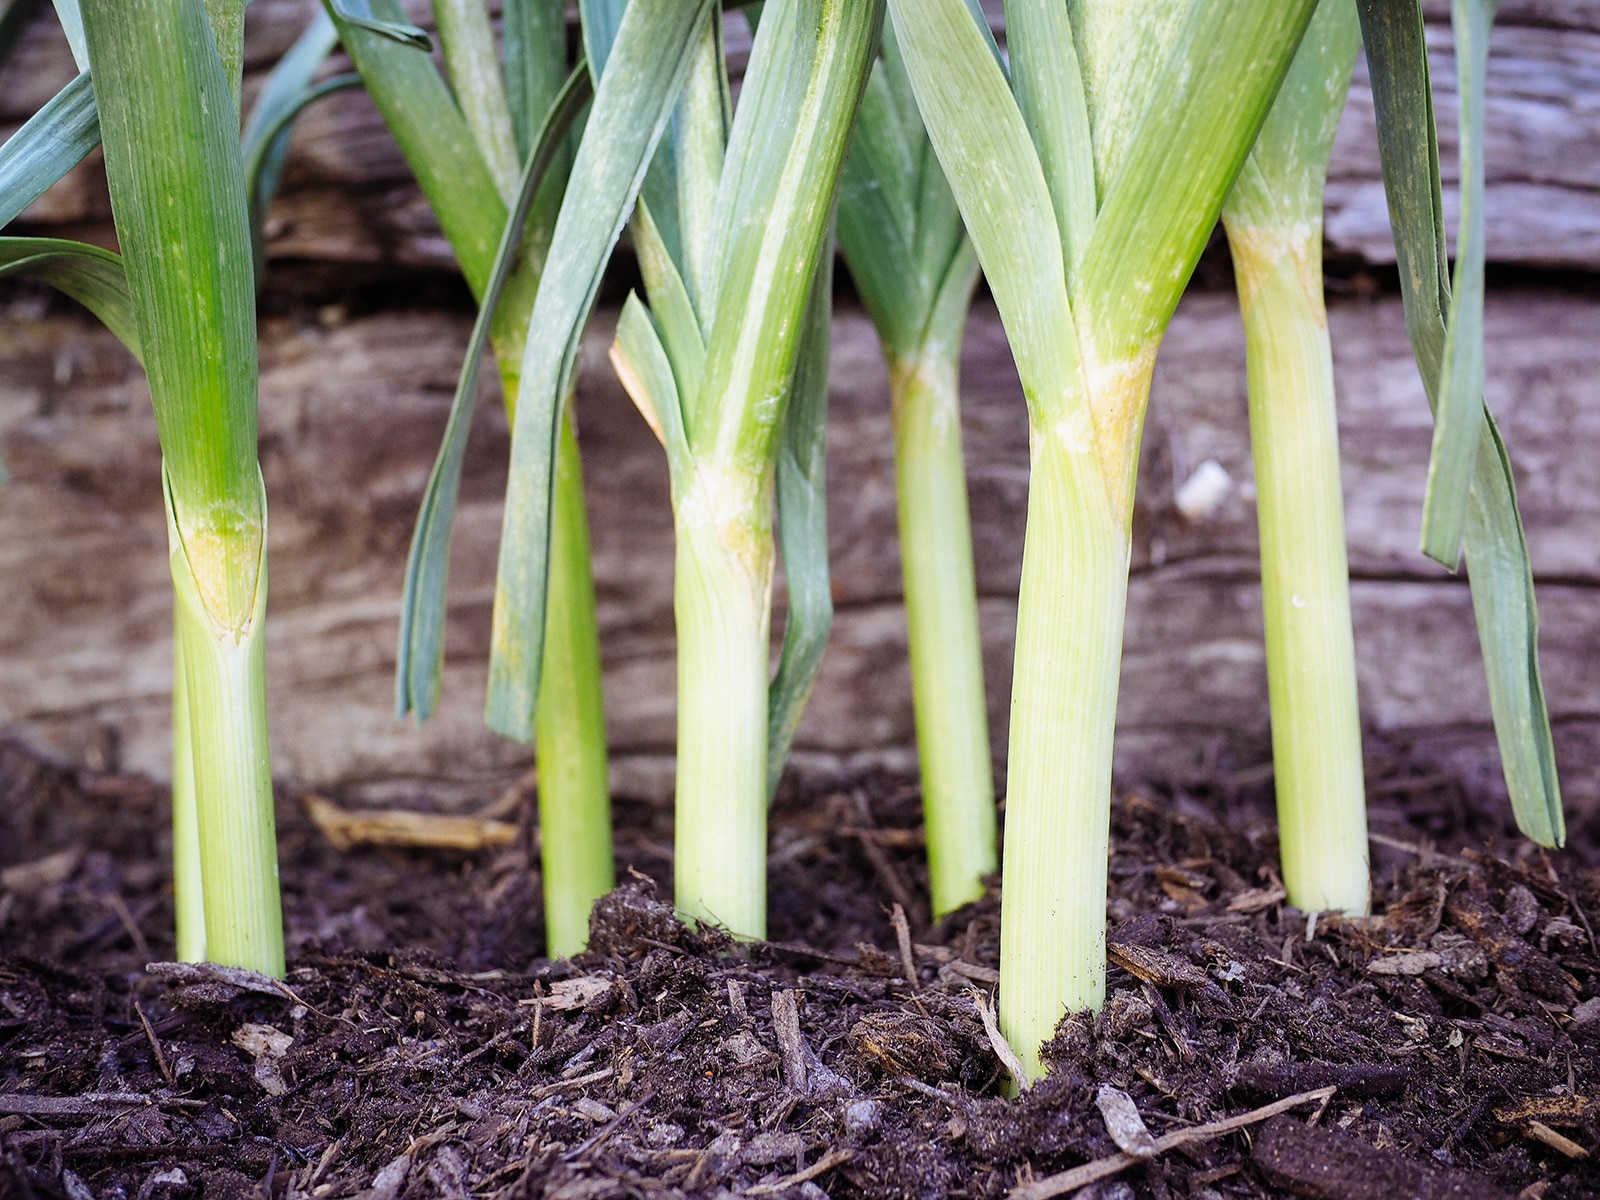 Green garlic stems in soil